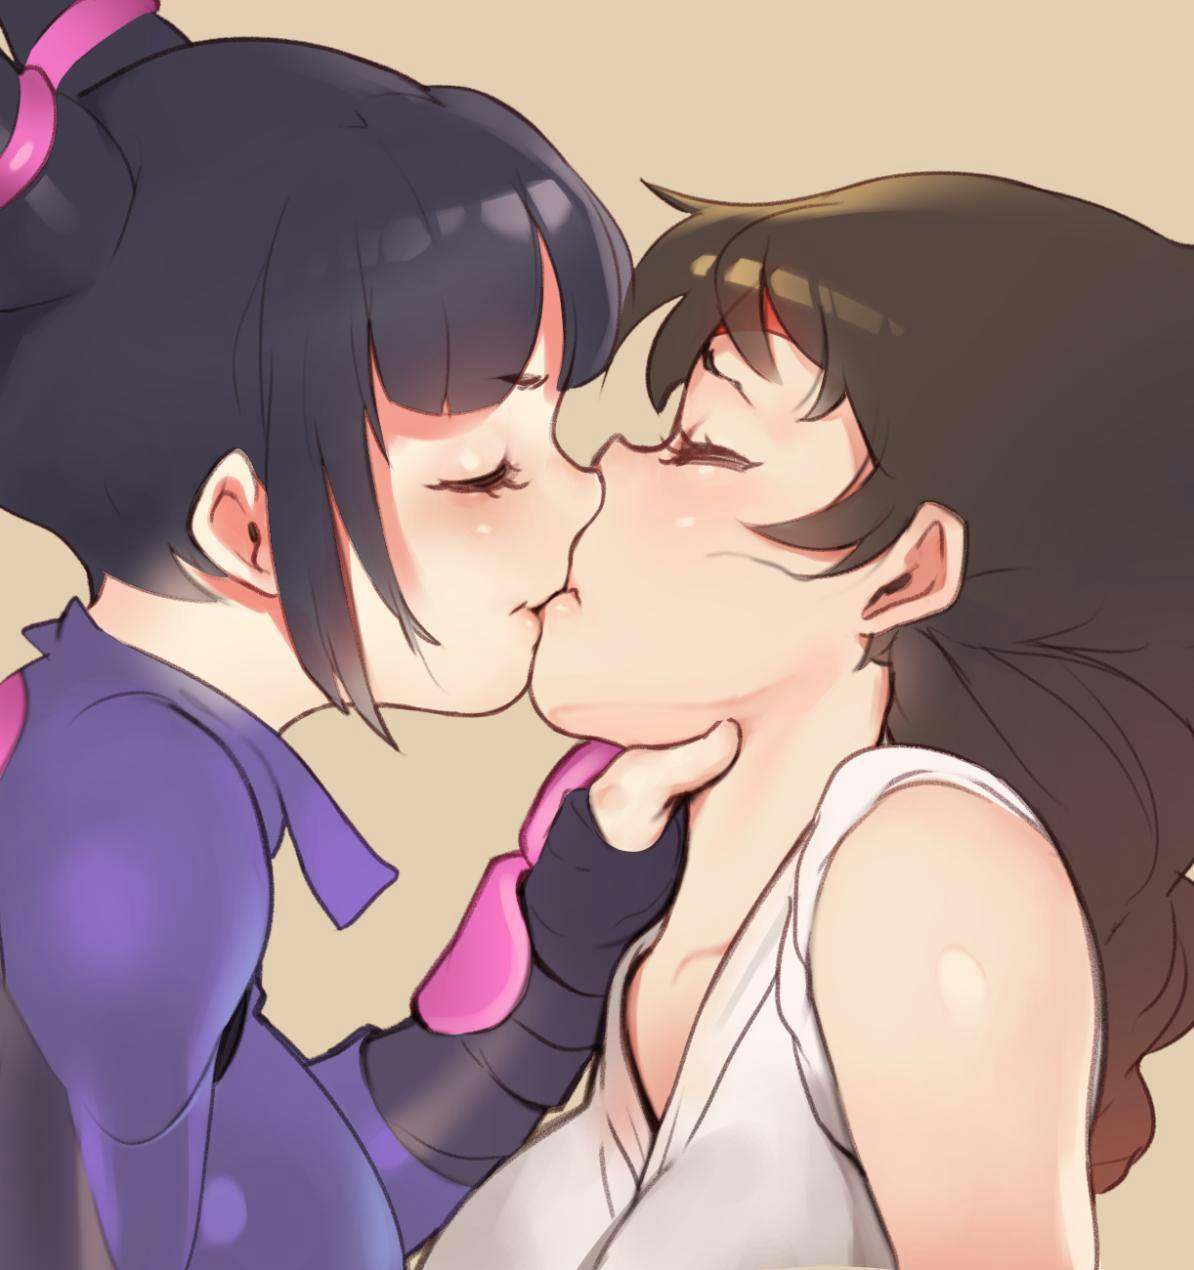 Lesbian Hentai: Best Yuri Hentai to Read and Stream Online